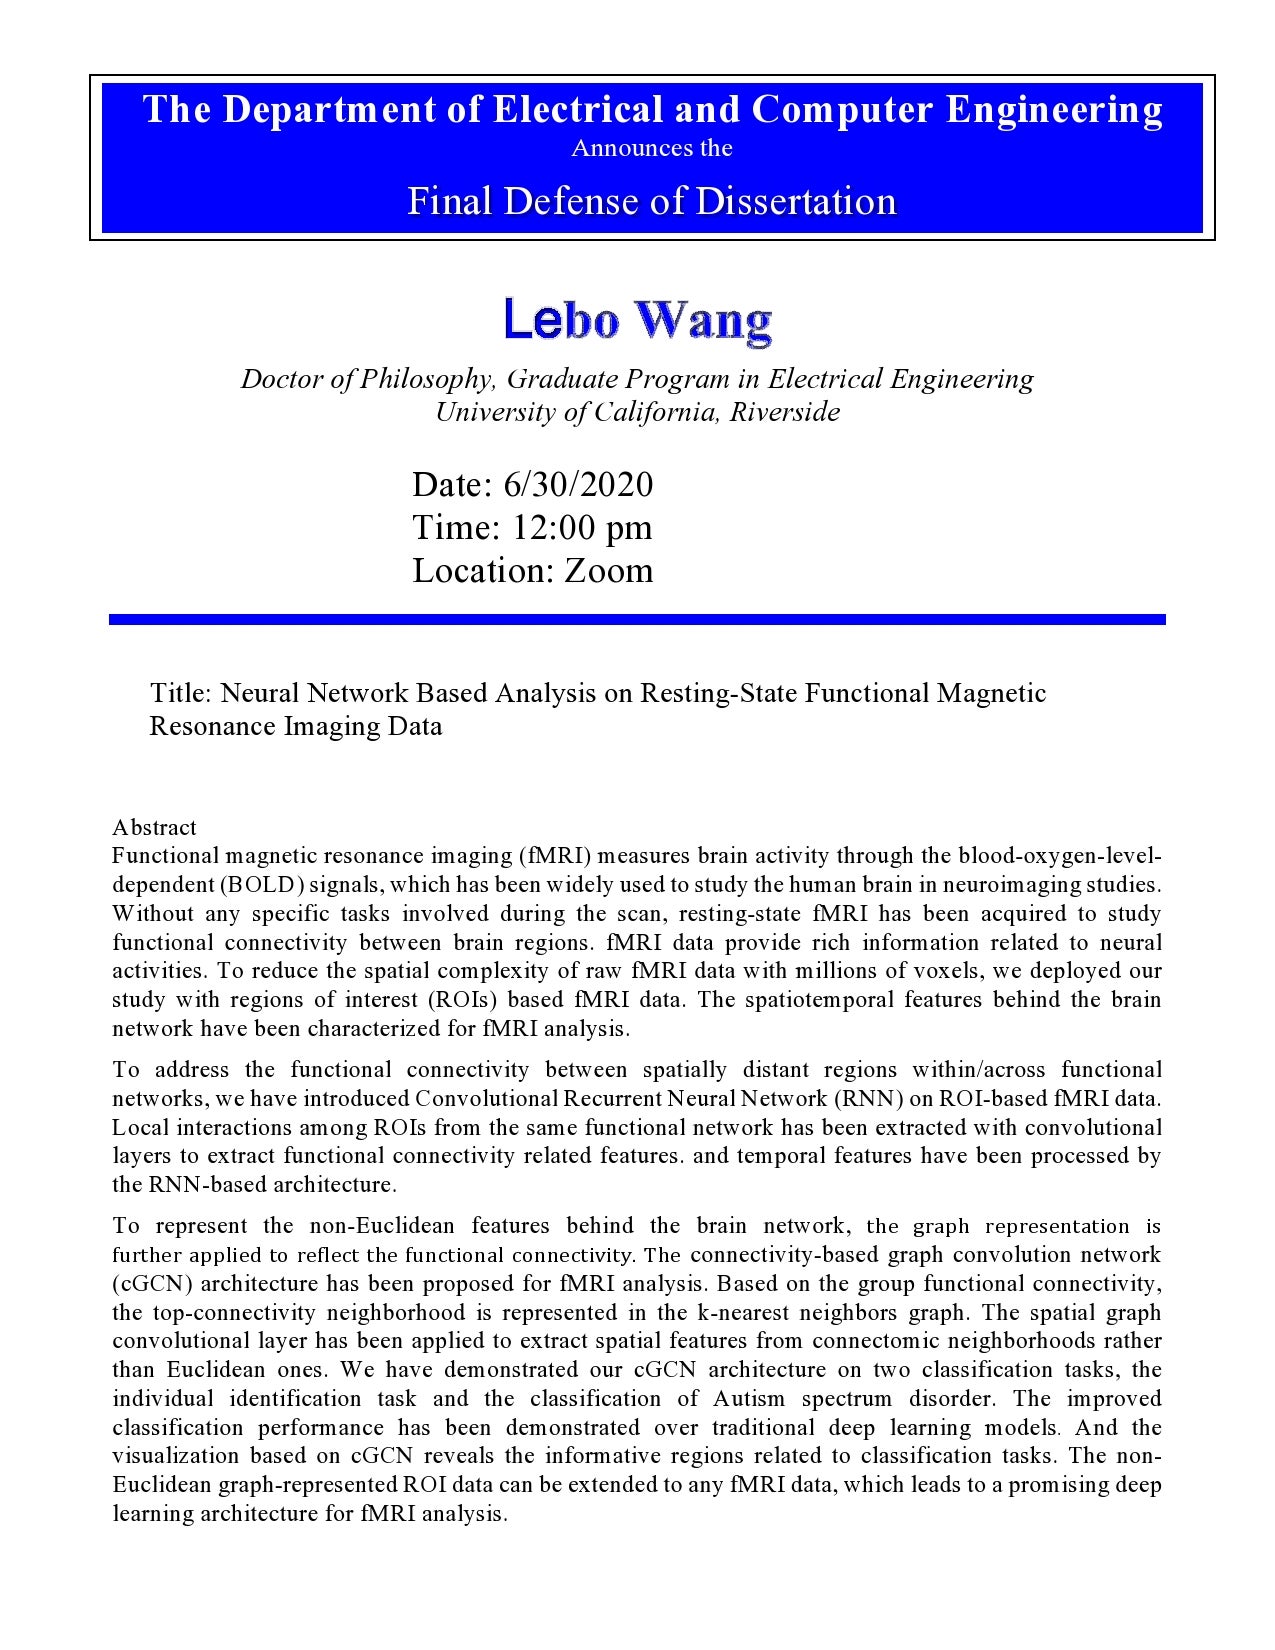 WANG, Lebo PhD Dissertation Defense Flyer